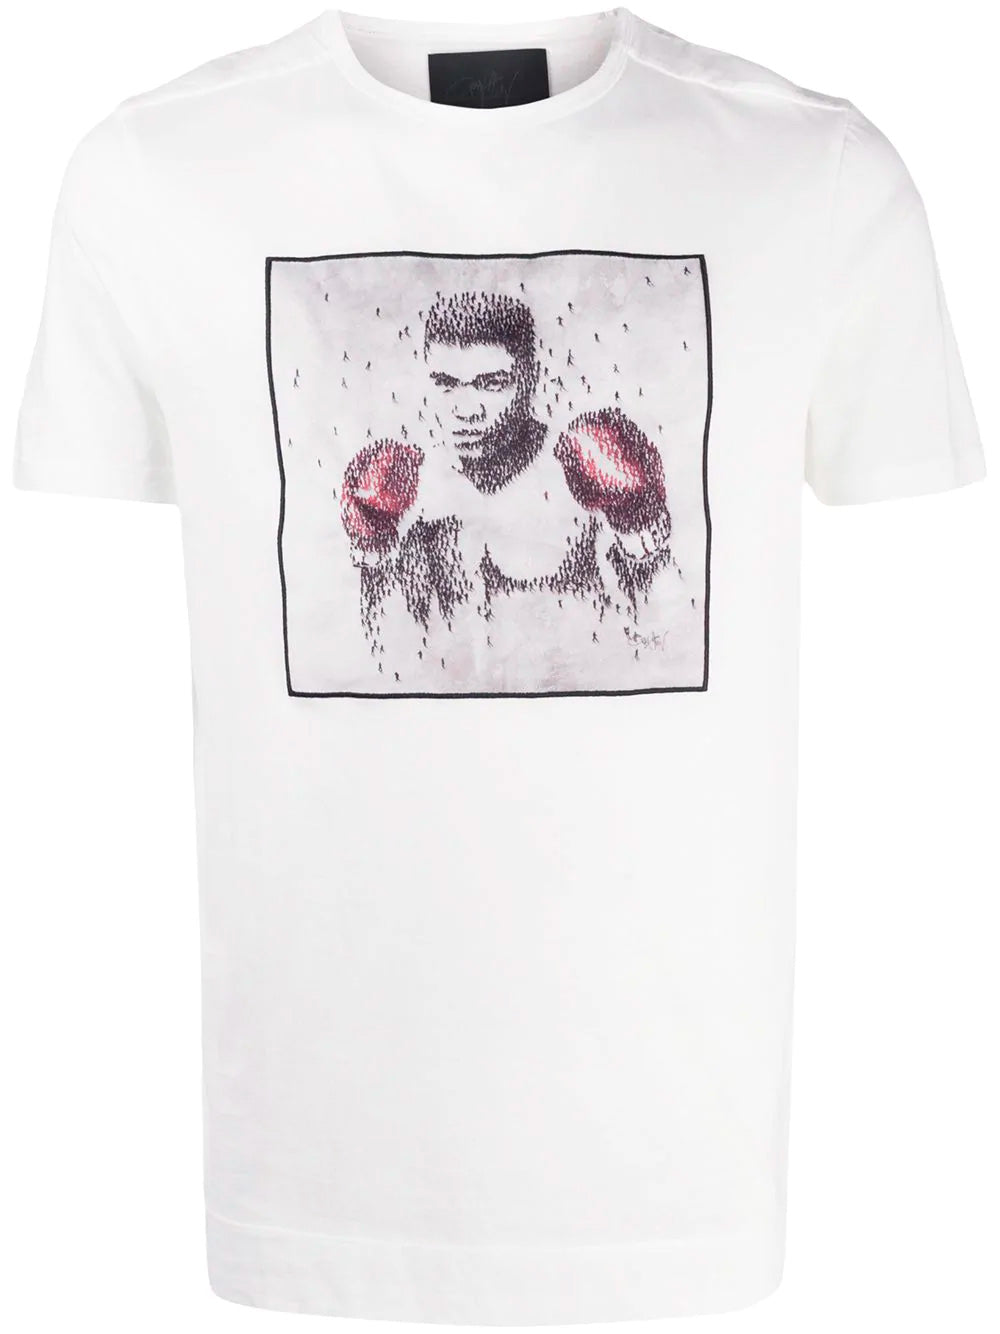 LIMITATO camiseta Muhammad Ali